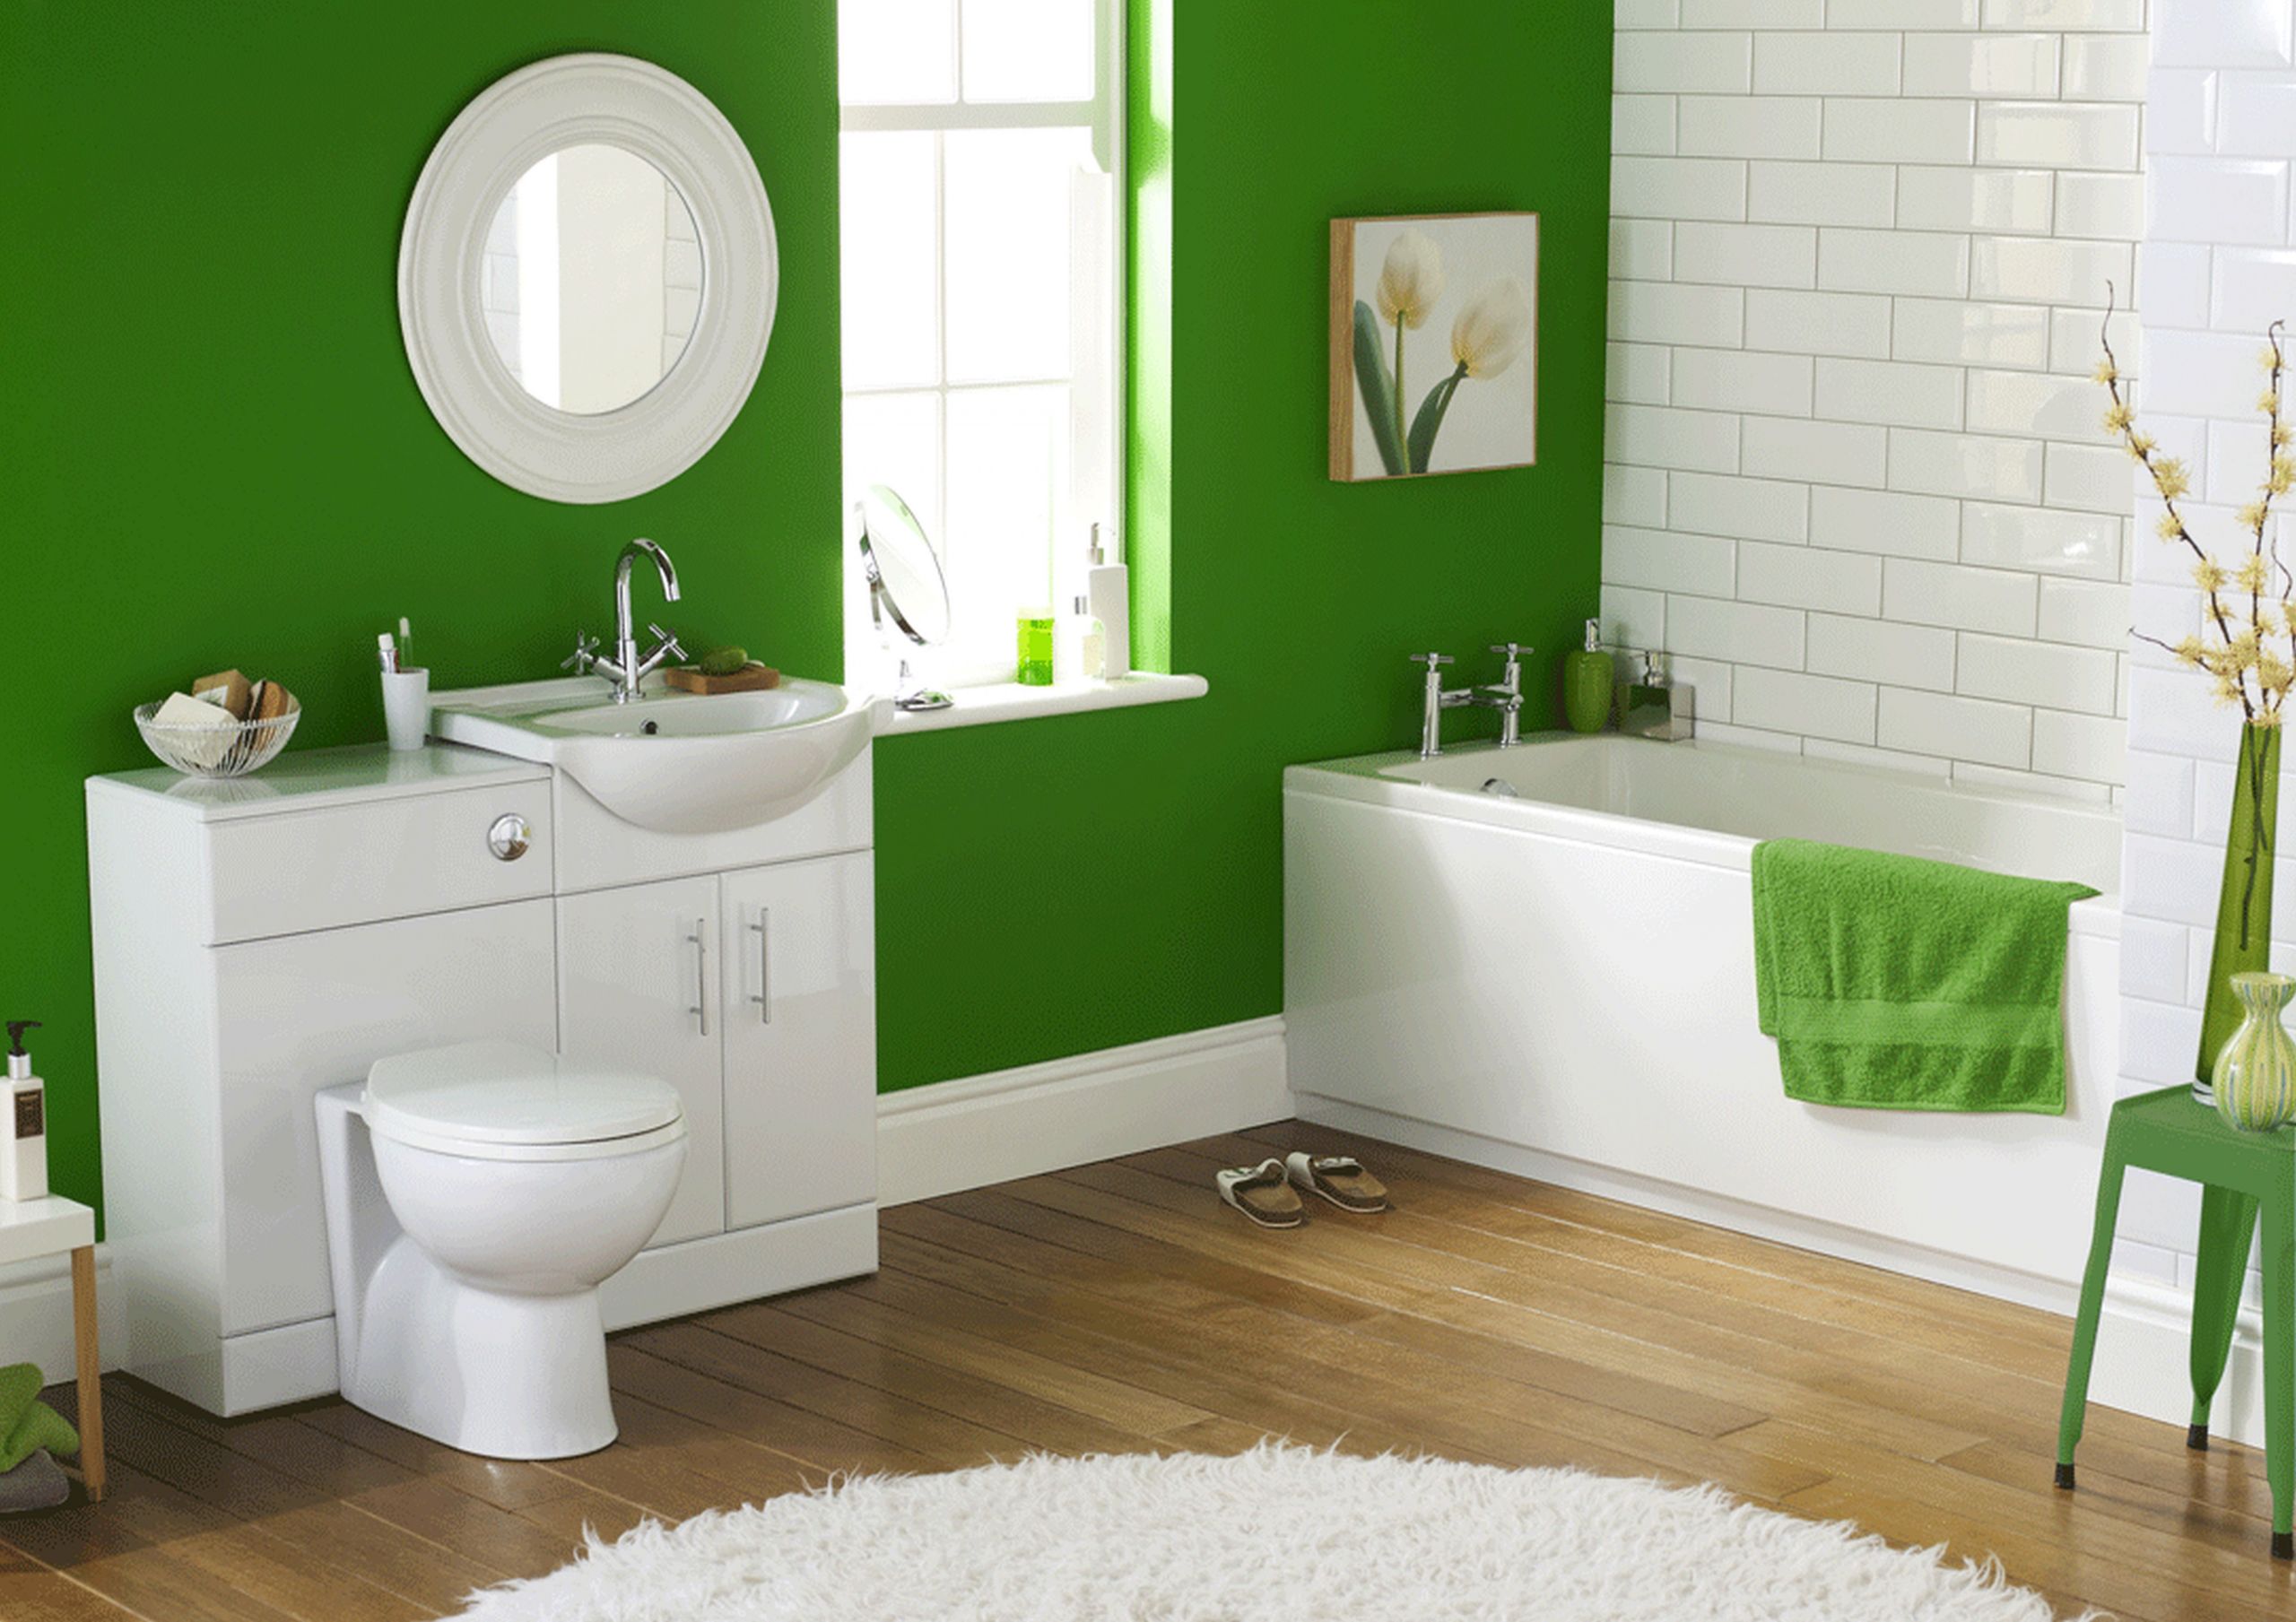 Green Bathroom Walls
 Bathroom Décor Ideas From Tub To Colors MidCityEast